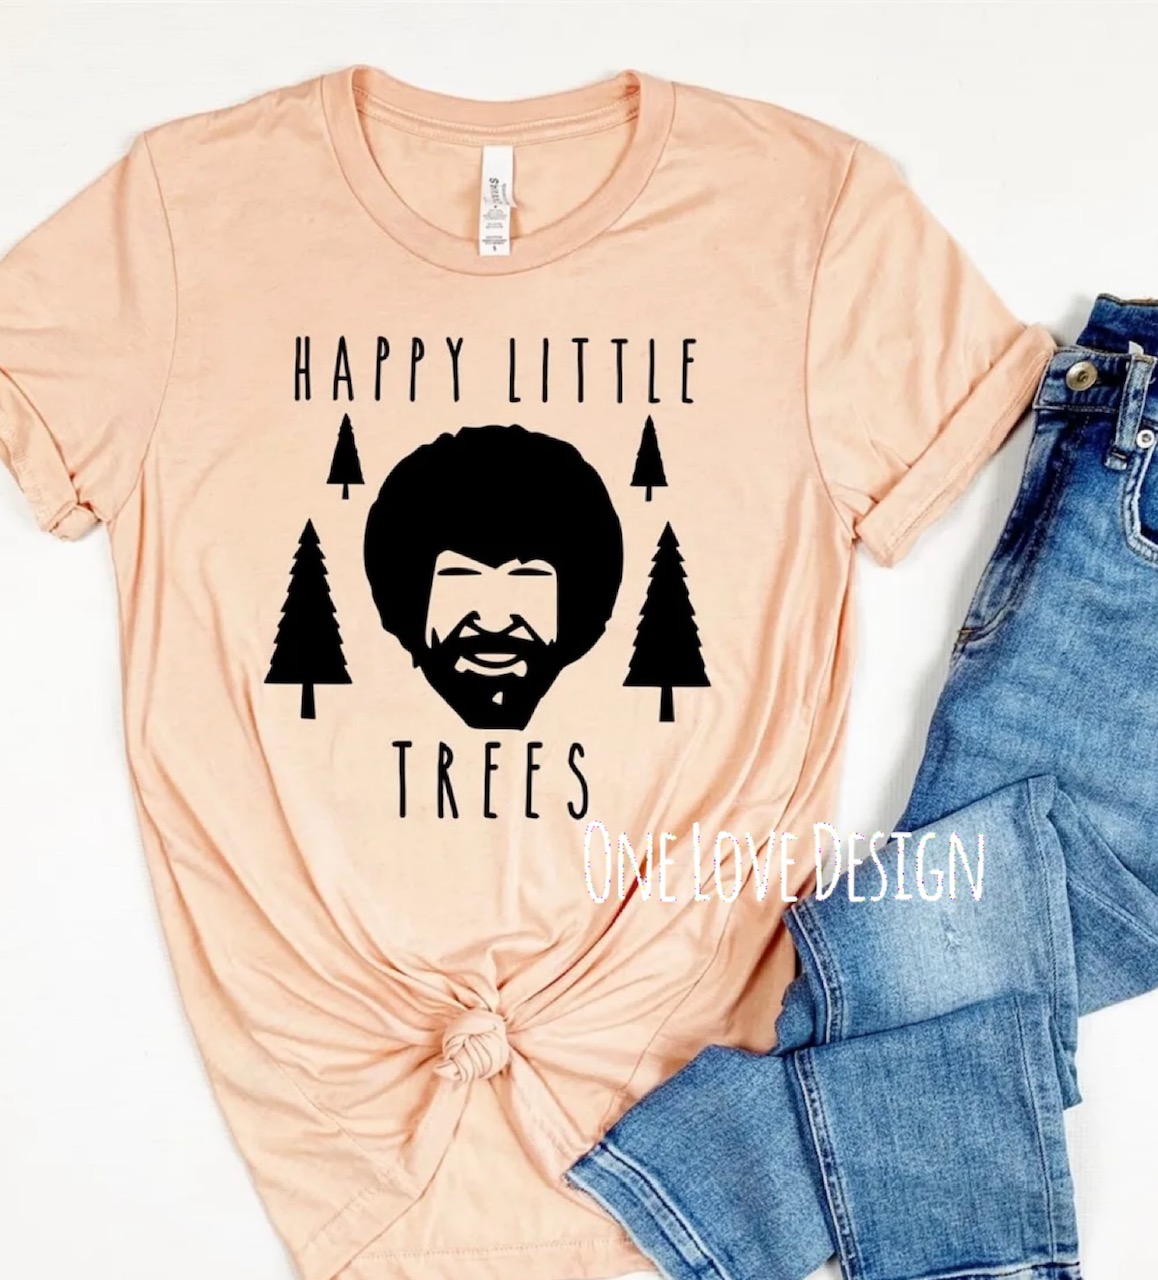 Happy Little Trees Vinyl Tee